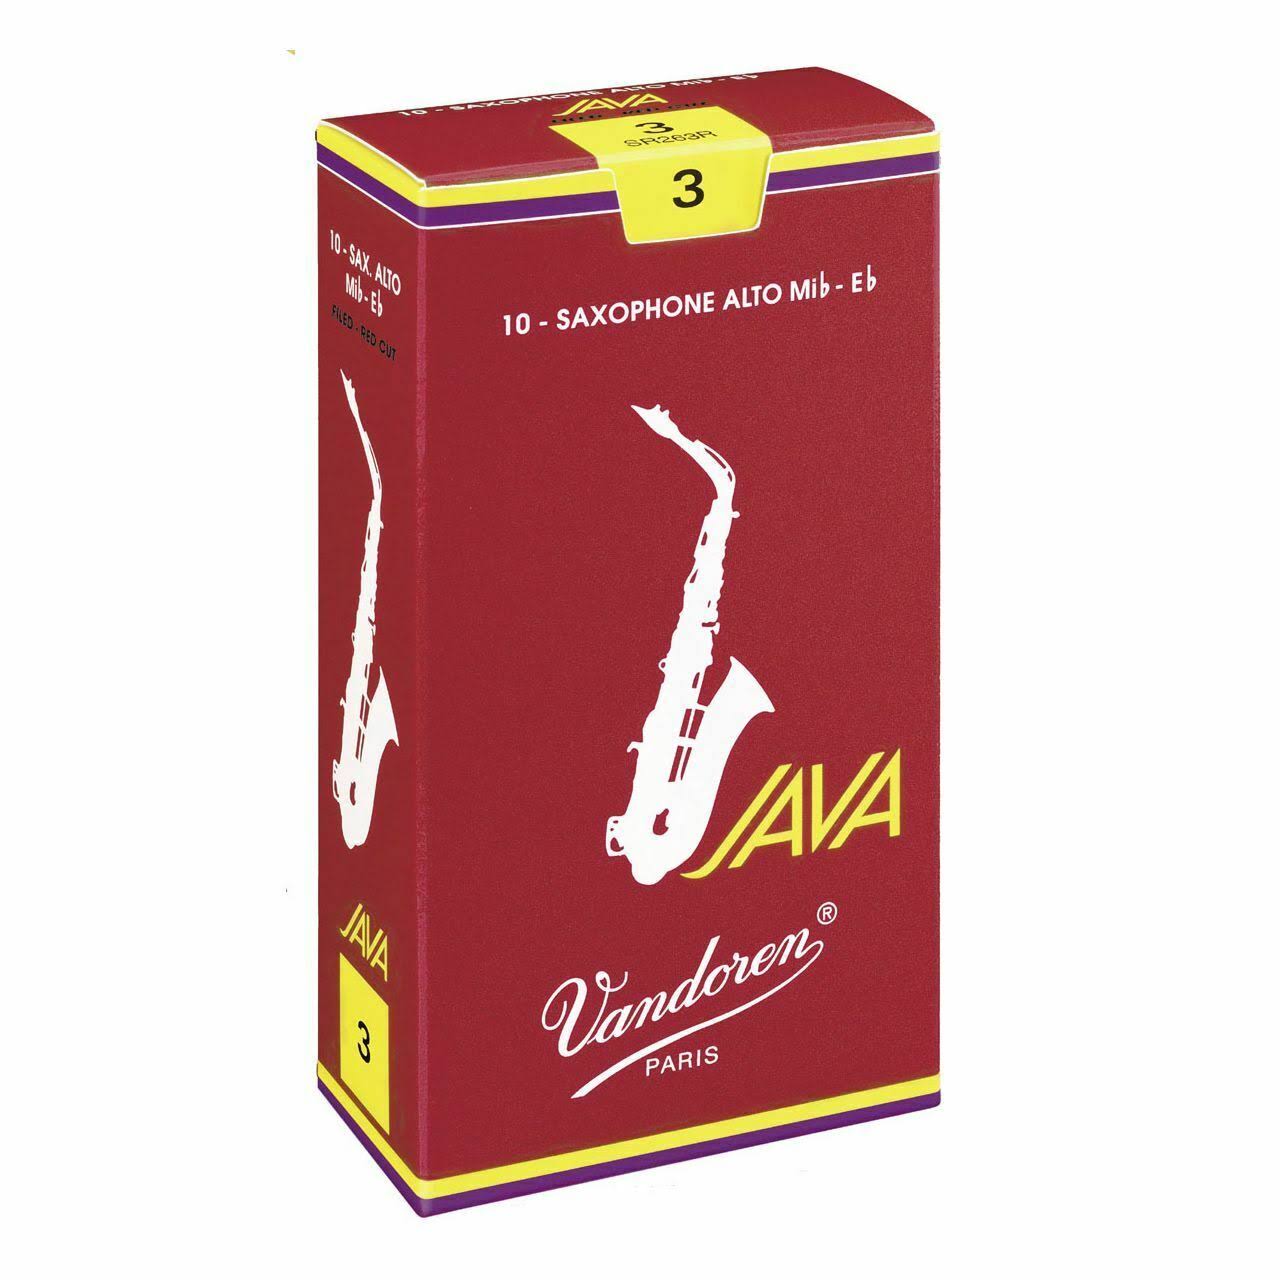 Vandoren Single Java Red Alto Saxophone Reeds - Strength 2.5